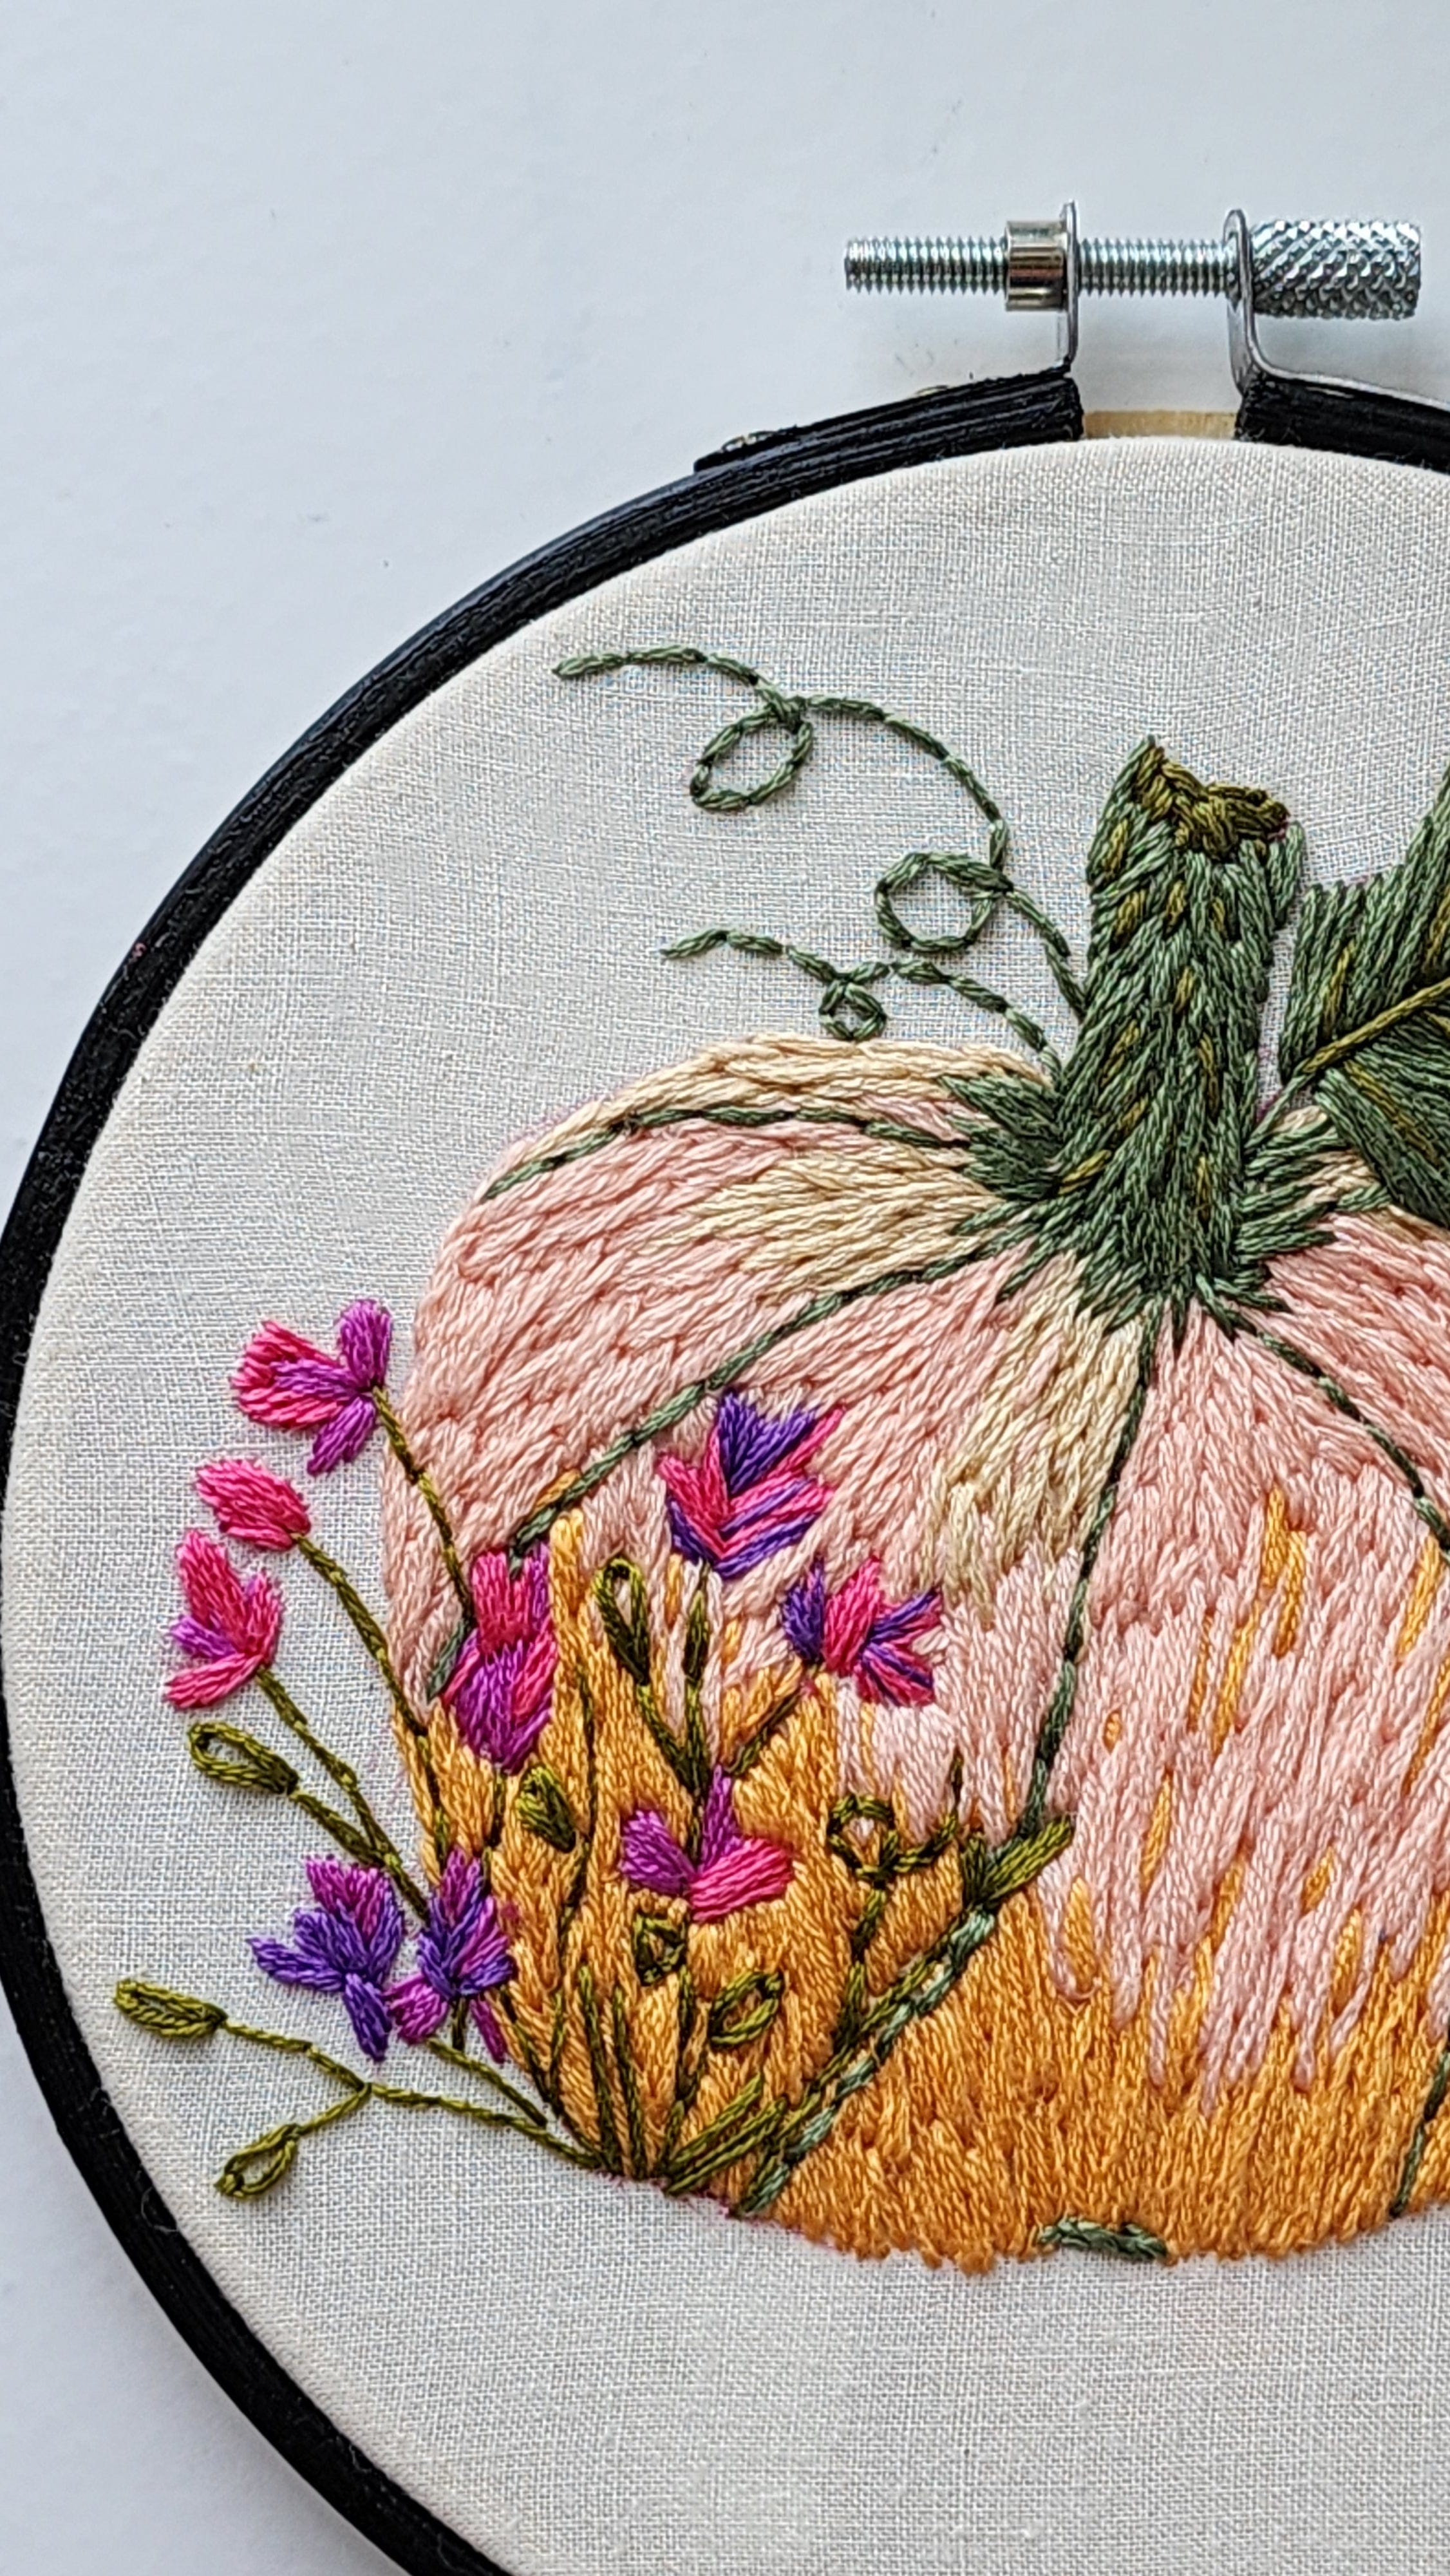  Yutaohui Funny Pumpkin Flower bee Embroidery Kit for